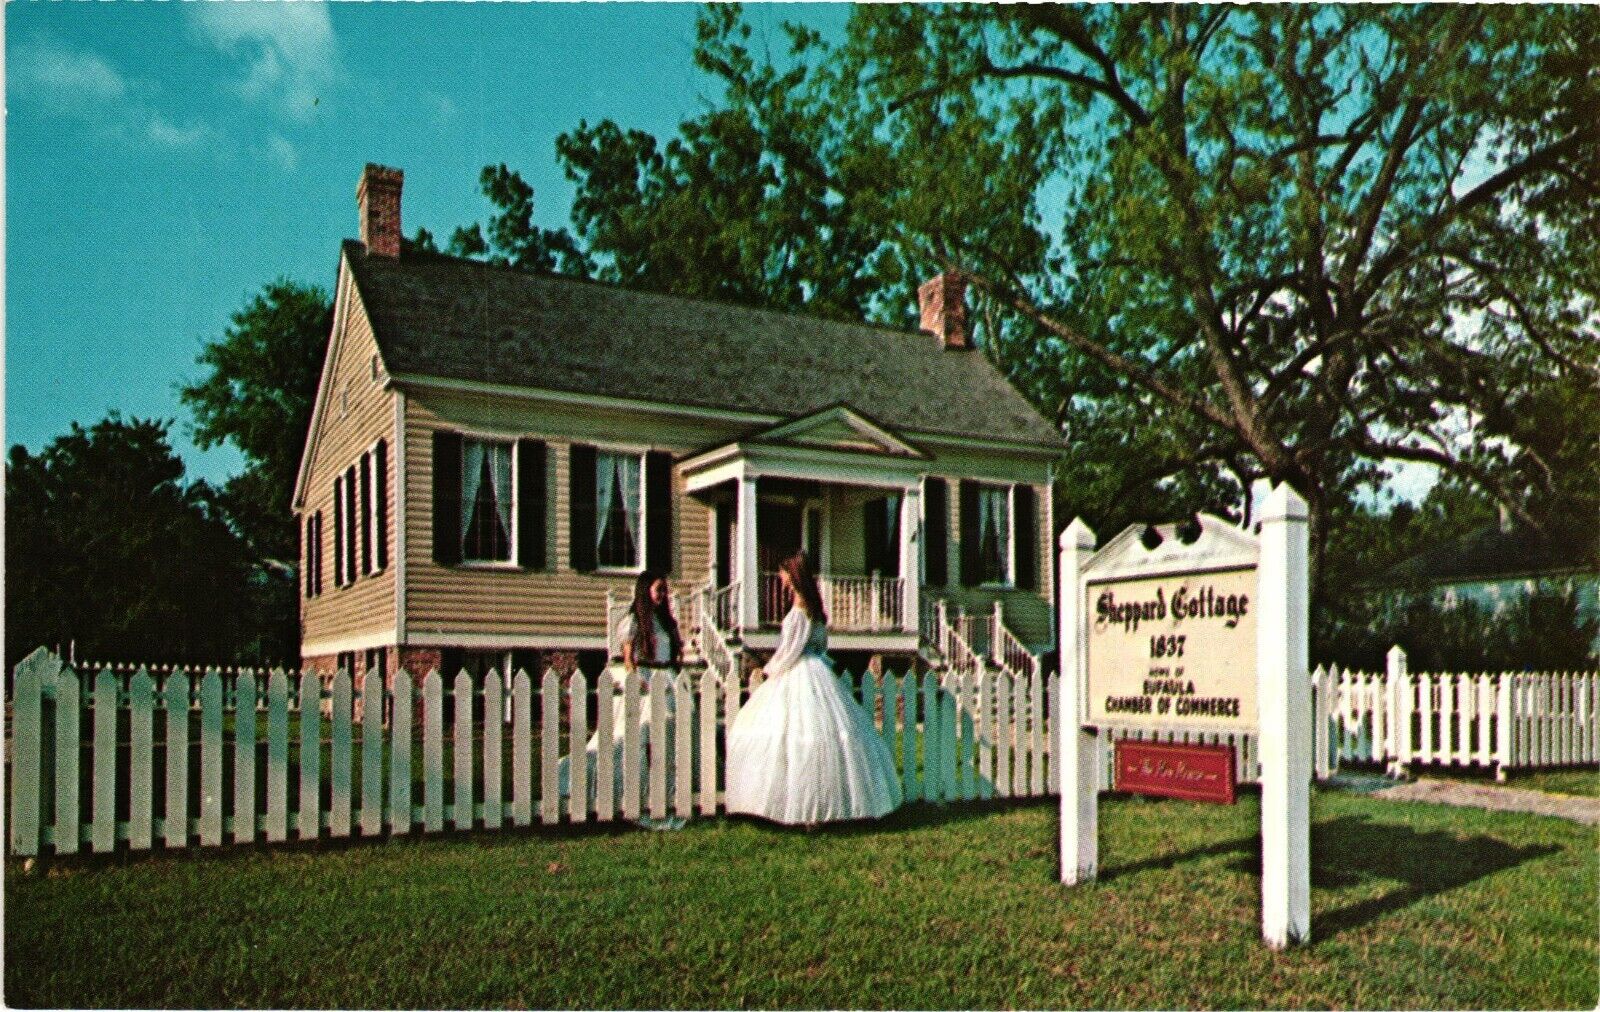 Sheppard Cottage Circa 1837 Eufaula Alabama Street View Vintage Postcard